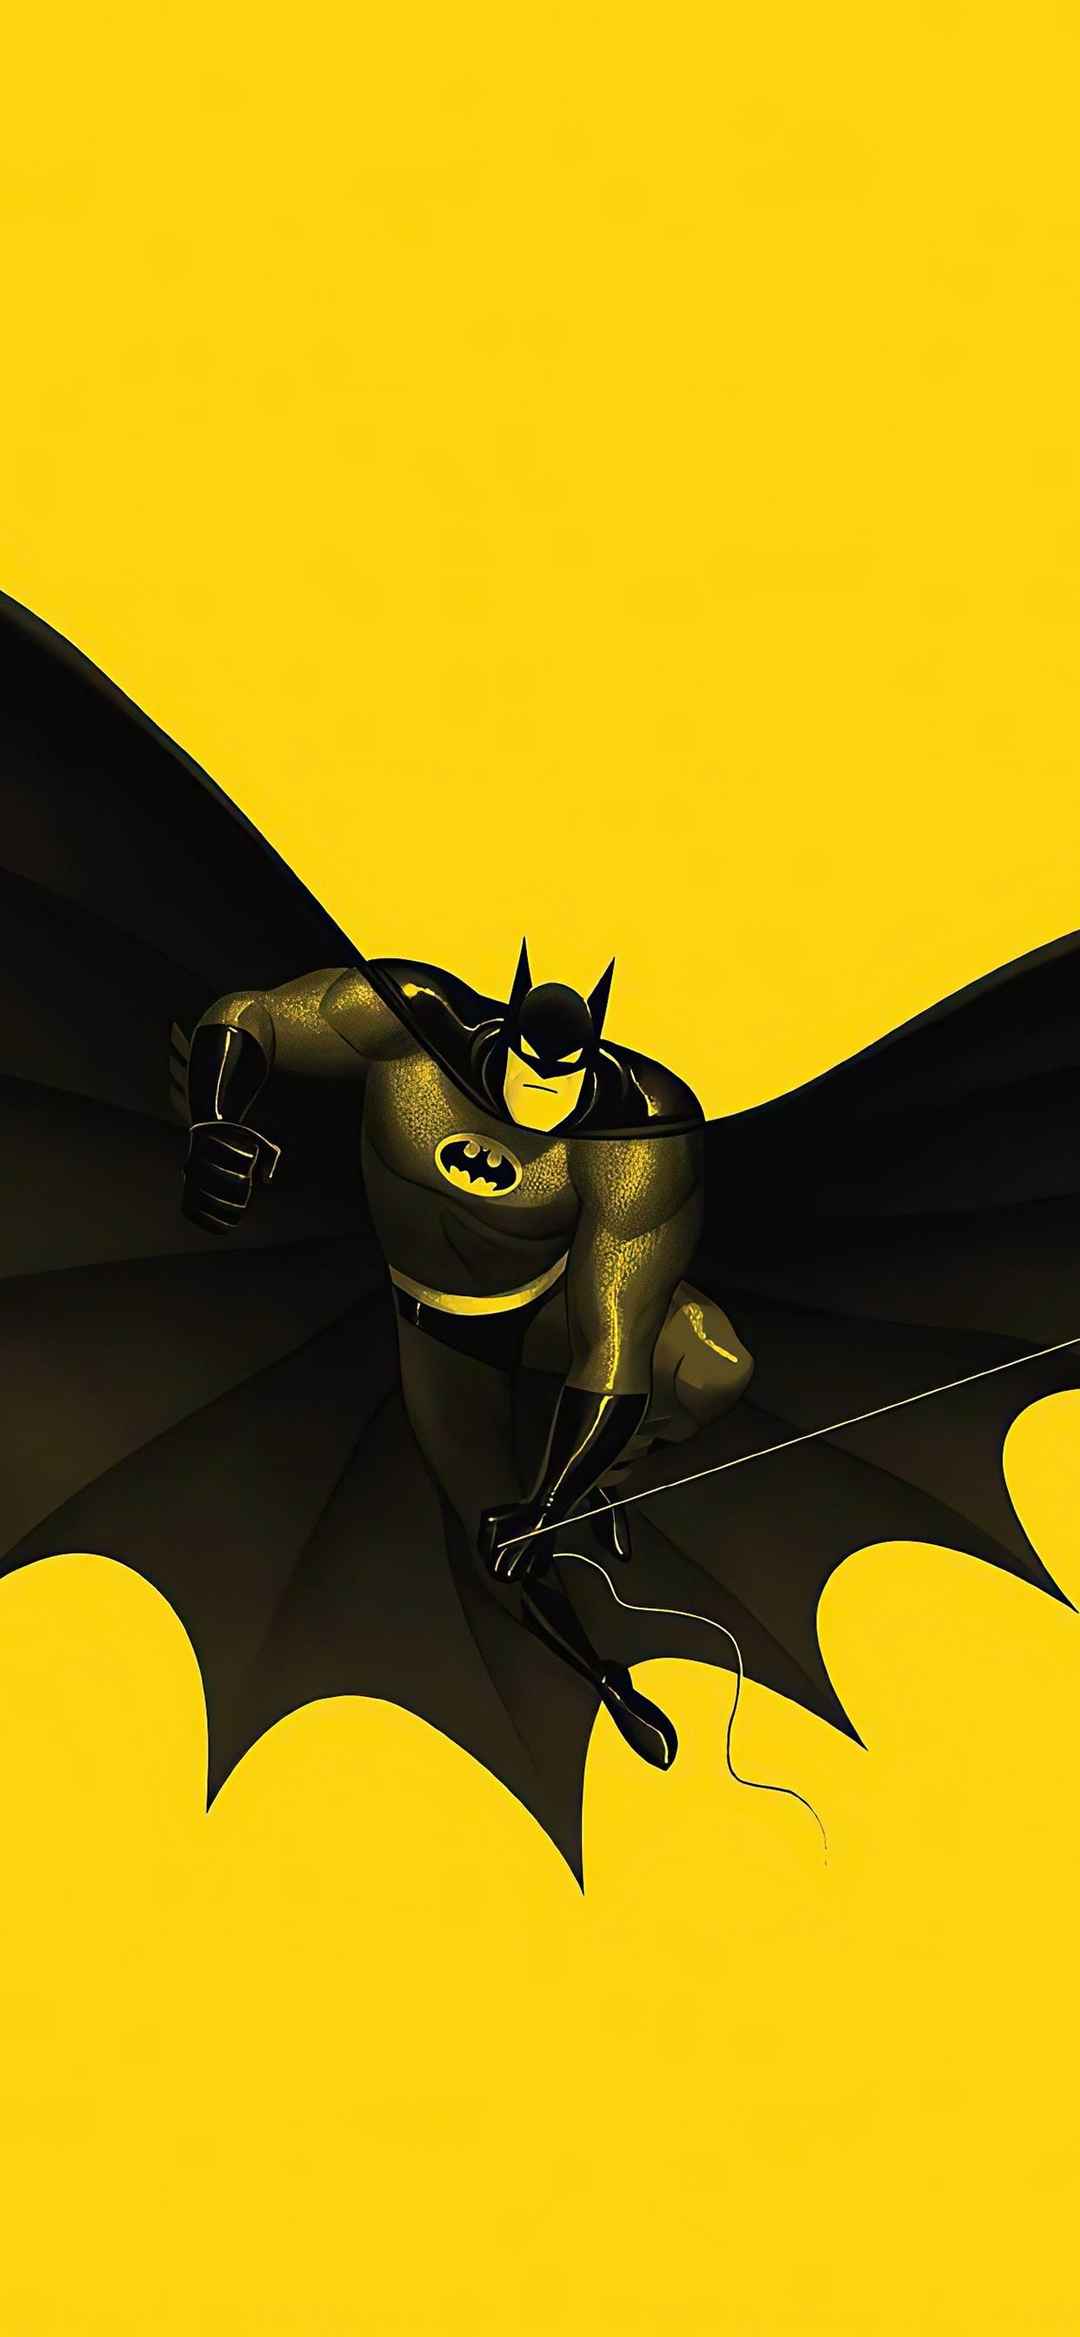 DC超级英雄蝙蝠侠好看又个性的壁纸图片